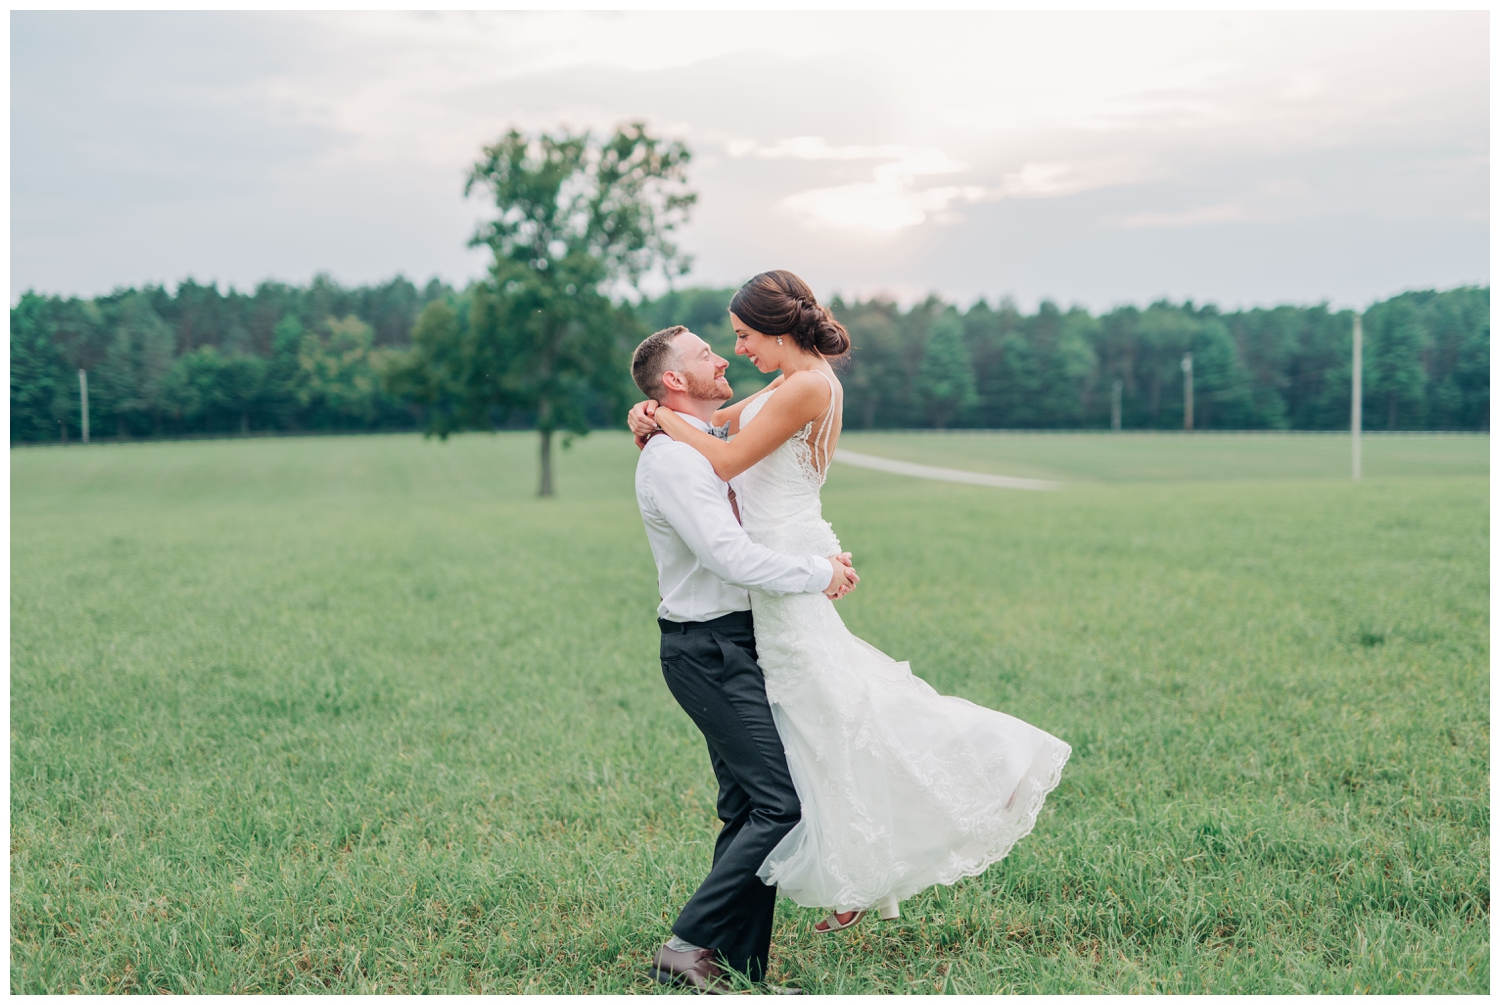 Cook Forest Wedding,Hannah Bryerton Photography,NWPA Weddings,Northwestern Pennslyvania Weddings,Tuck'd Inn Farm Wedding,WNY Photographer,White Barn Event,